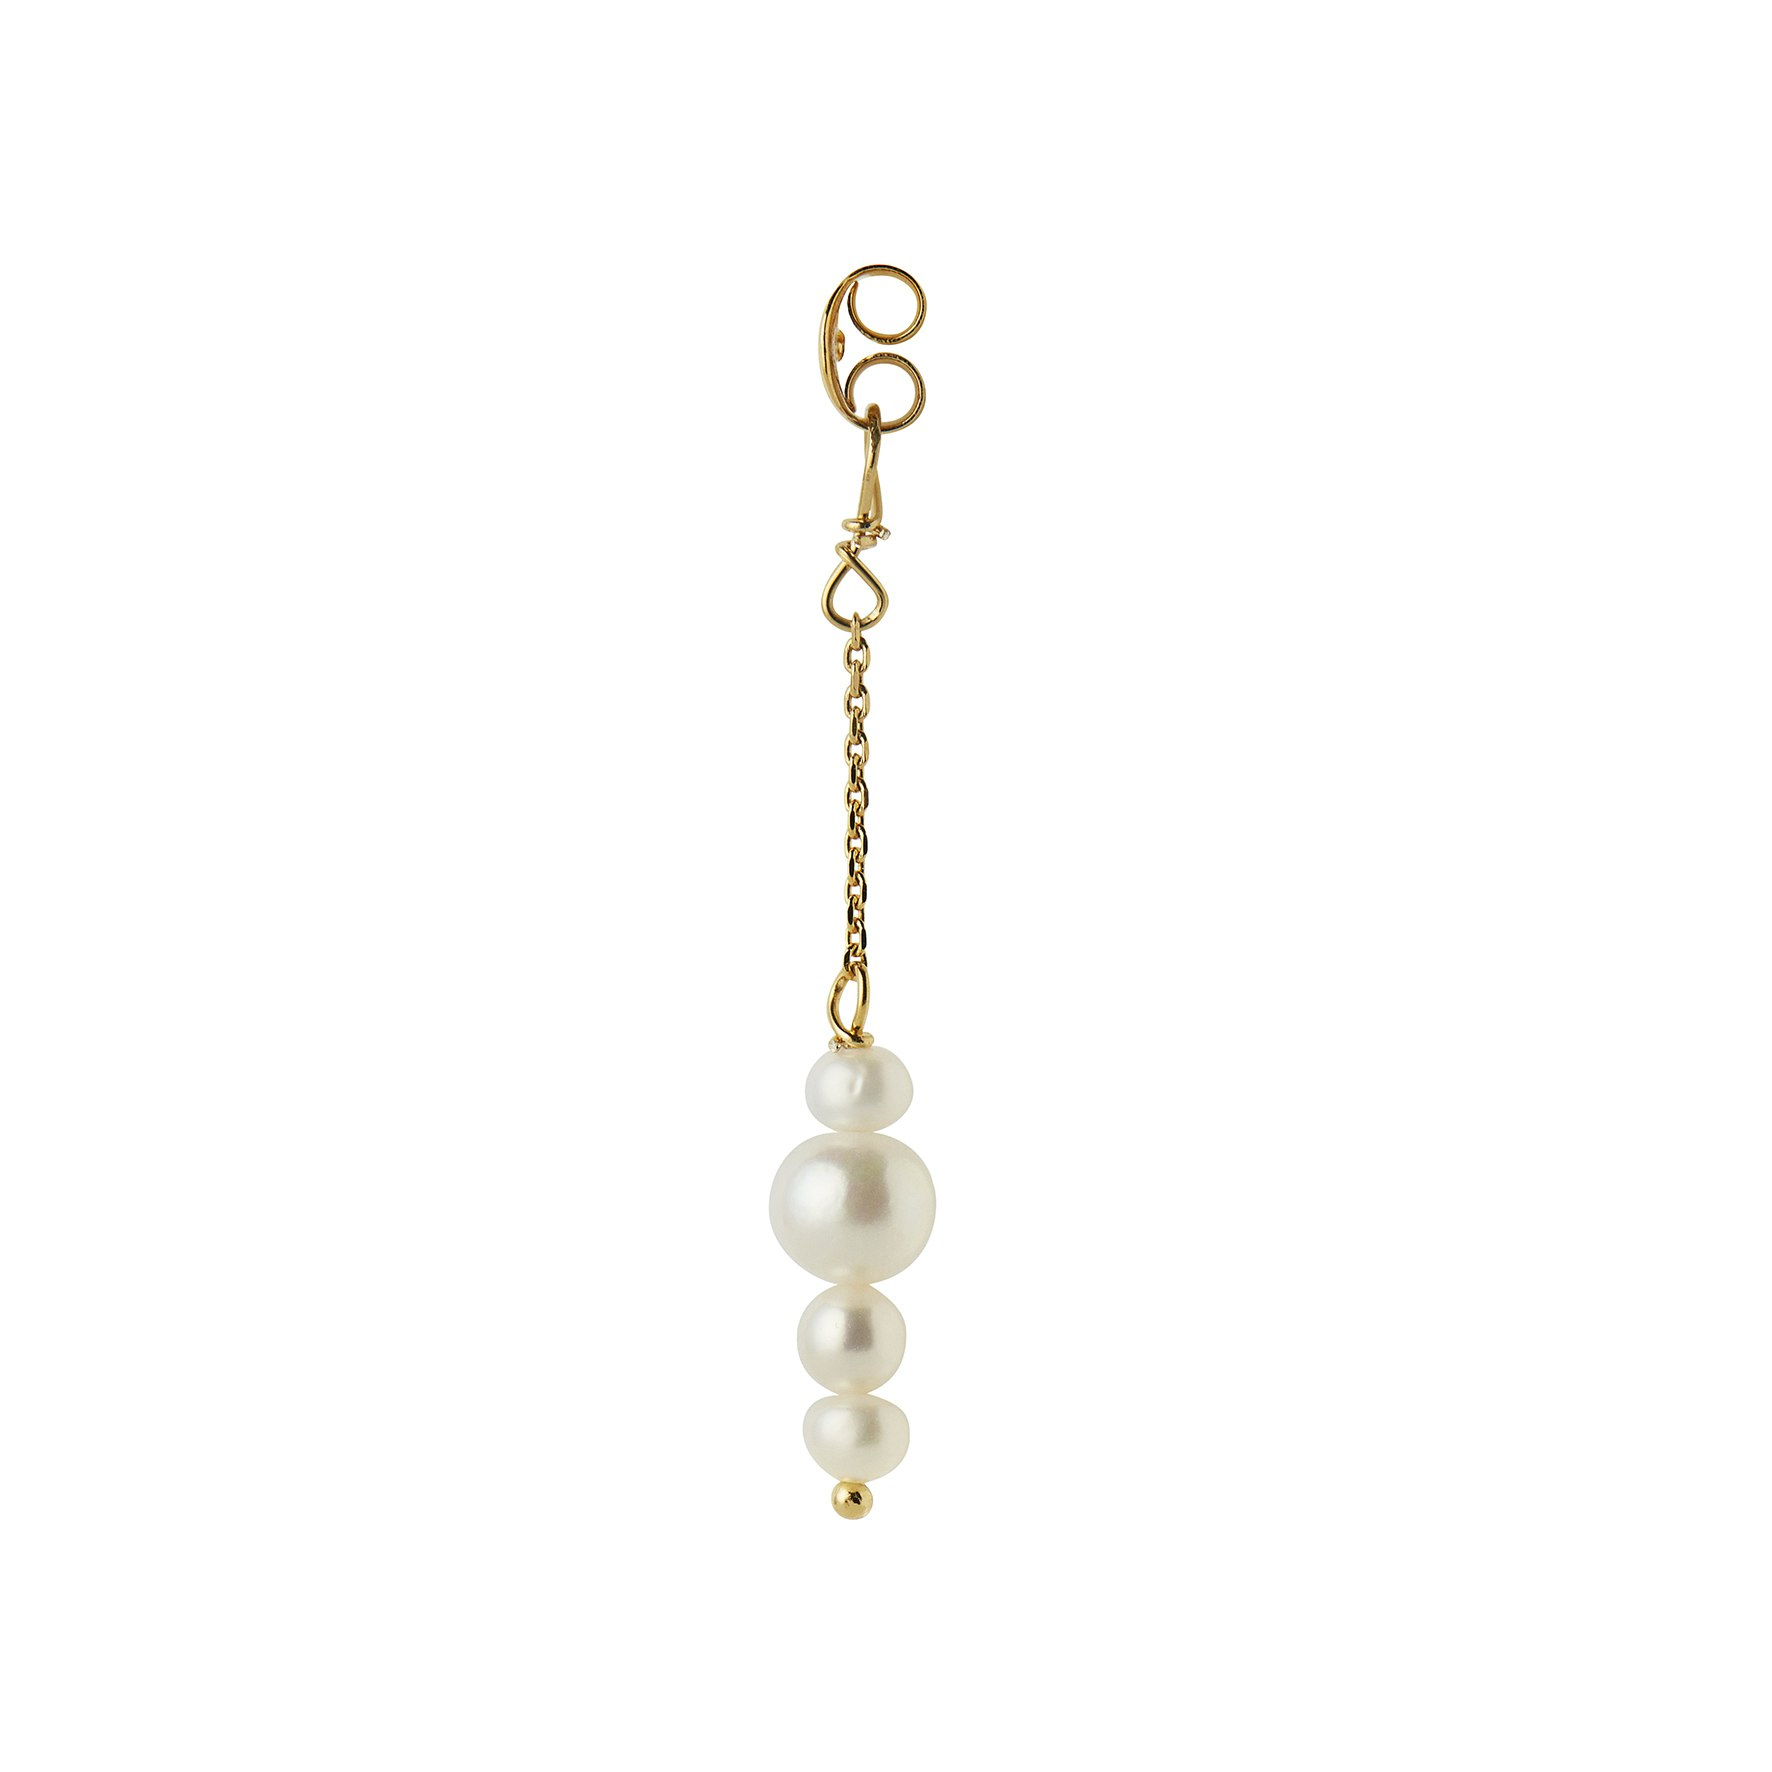 Pearl Berries Behind Ear Earring fra STINE A Jewelry i Sølv Sterling 925